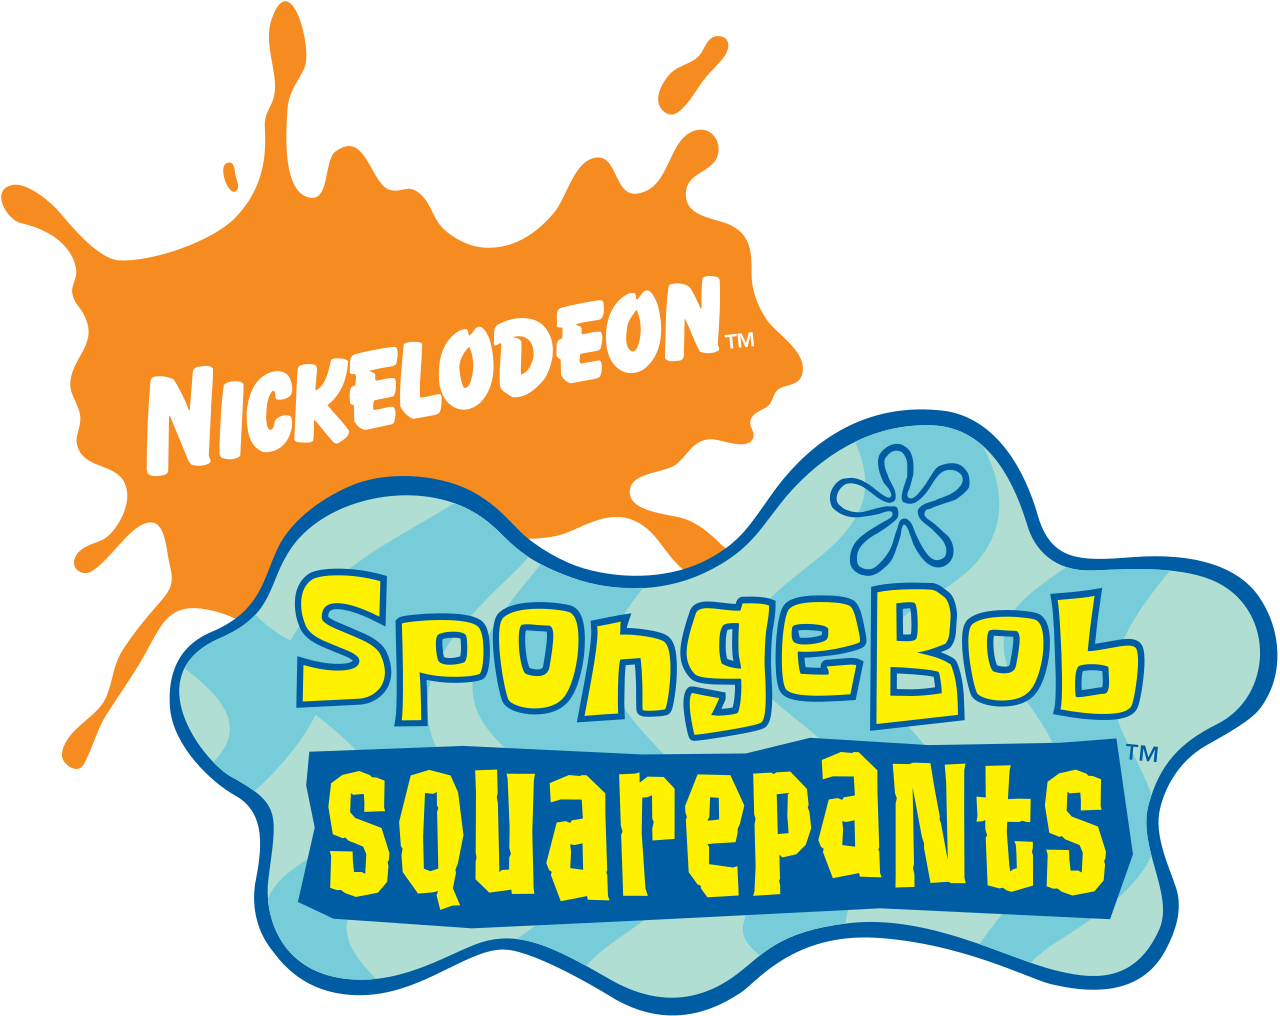 Spongebob Squarepants Wikipedia - Nickelodeon Spongebob Squarepants Logo (1280x1016)